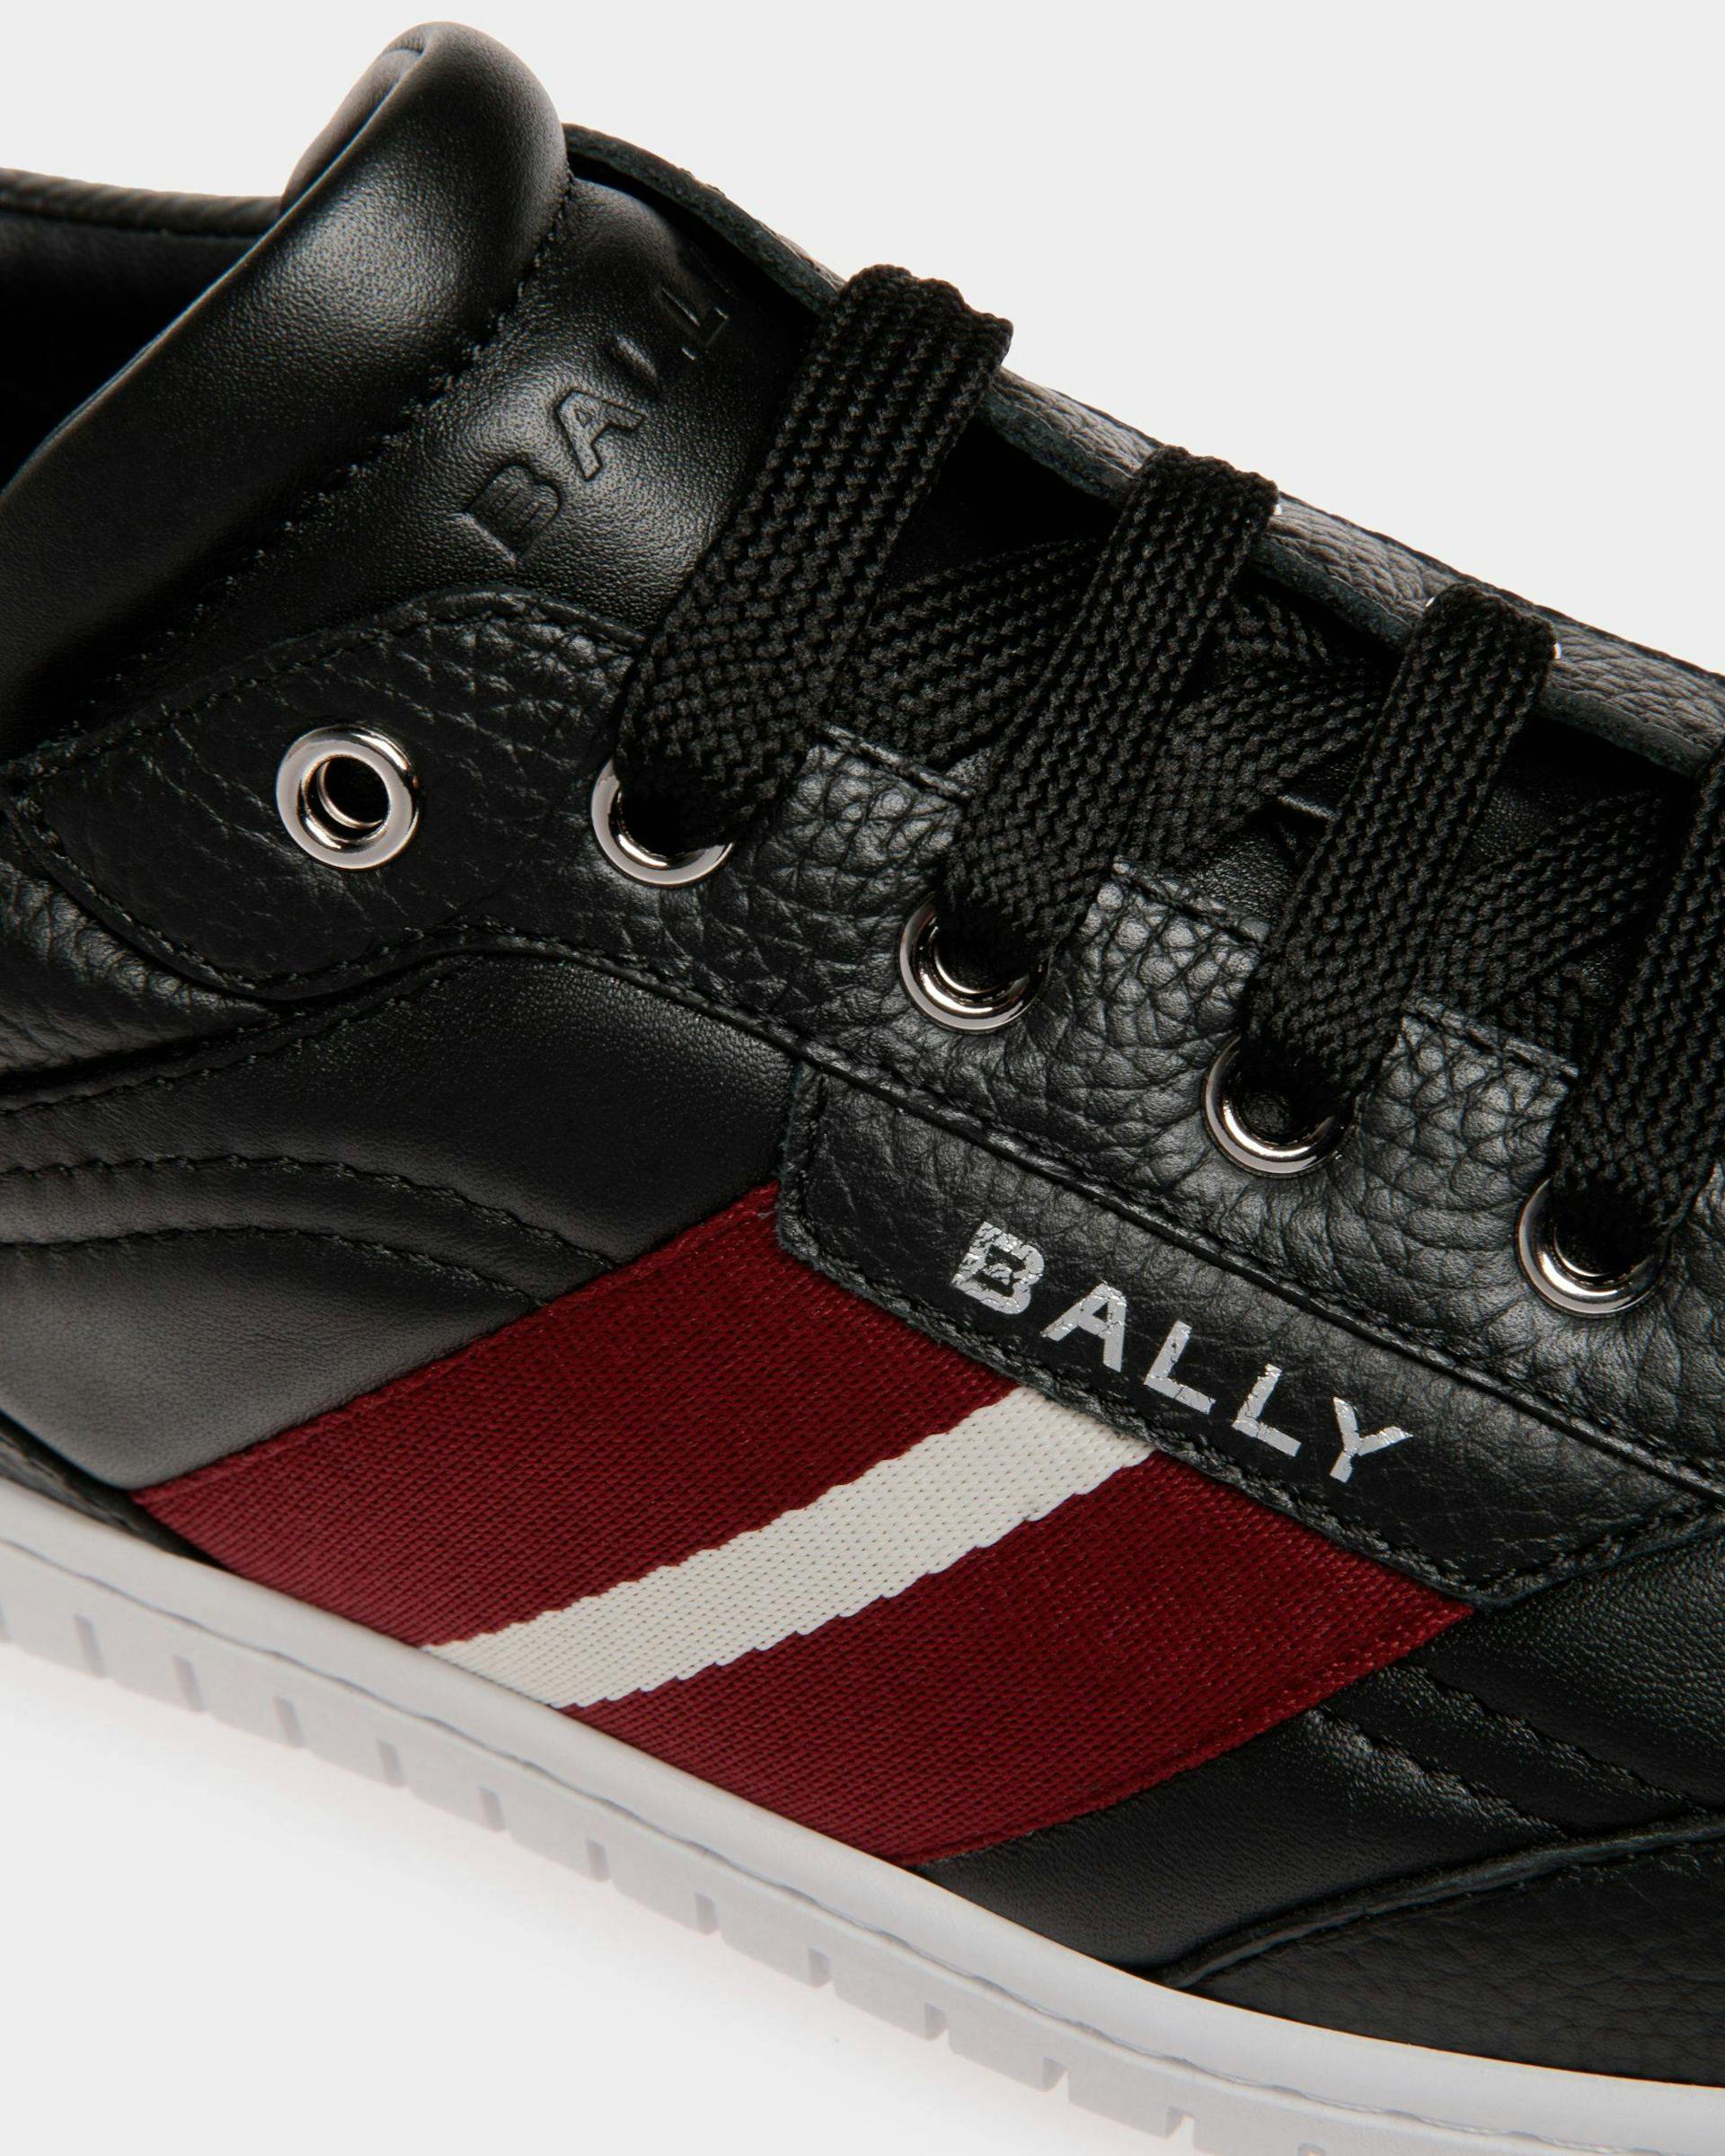 Men's Player Sneaker In Black Leather | Bally | Still Life Detail